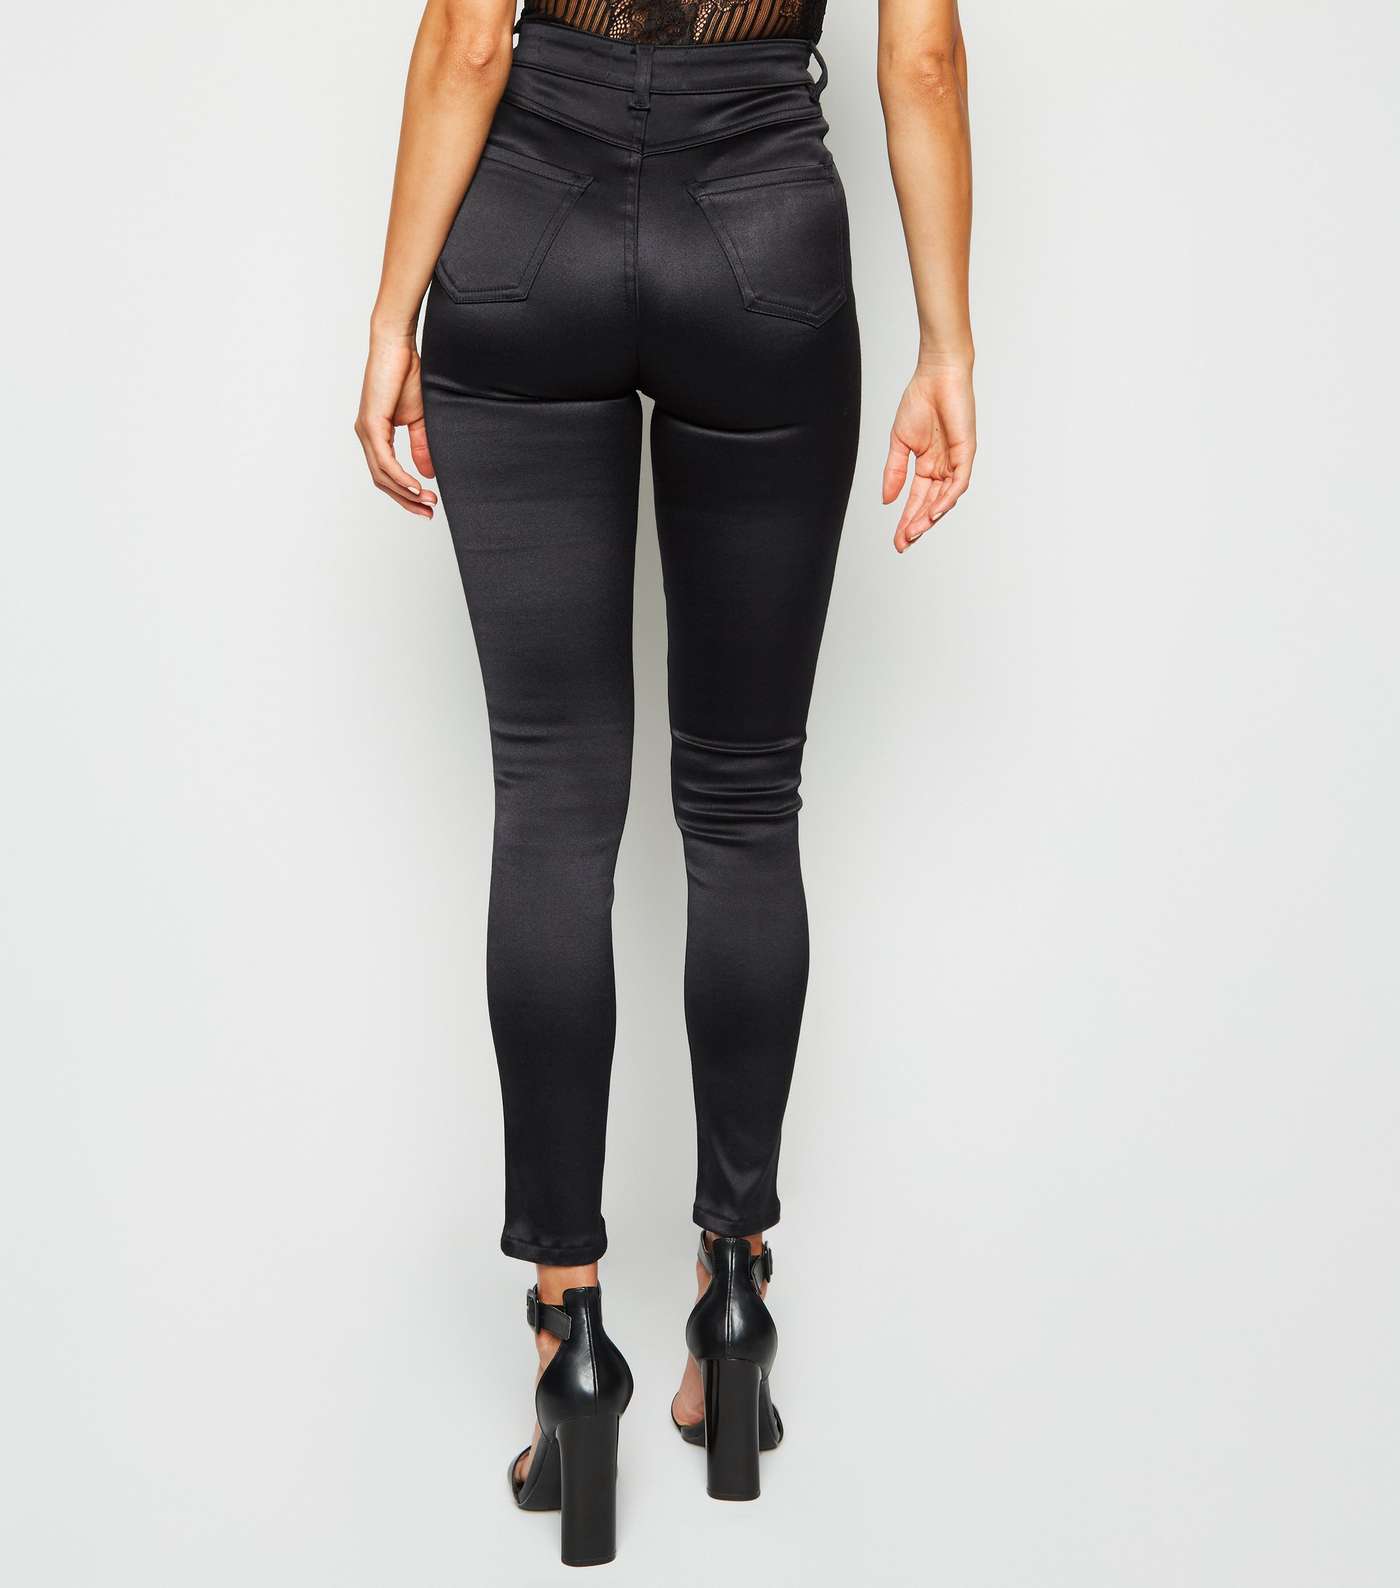 Black Satin High Waist Super Skinny Jeans Image 5